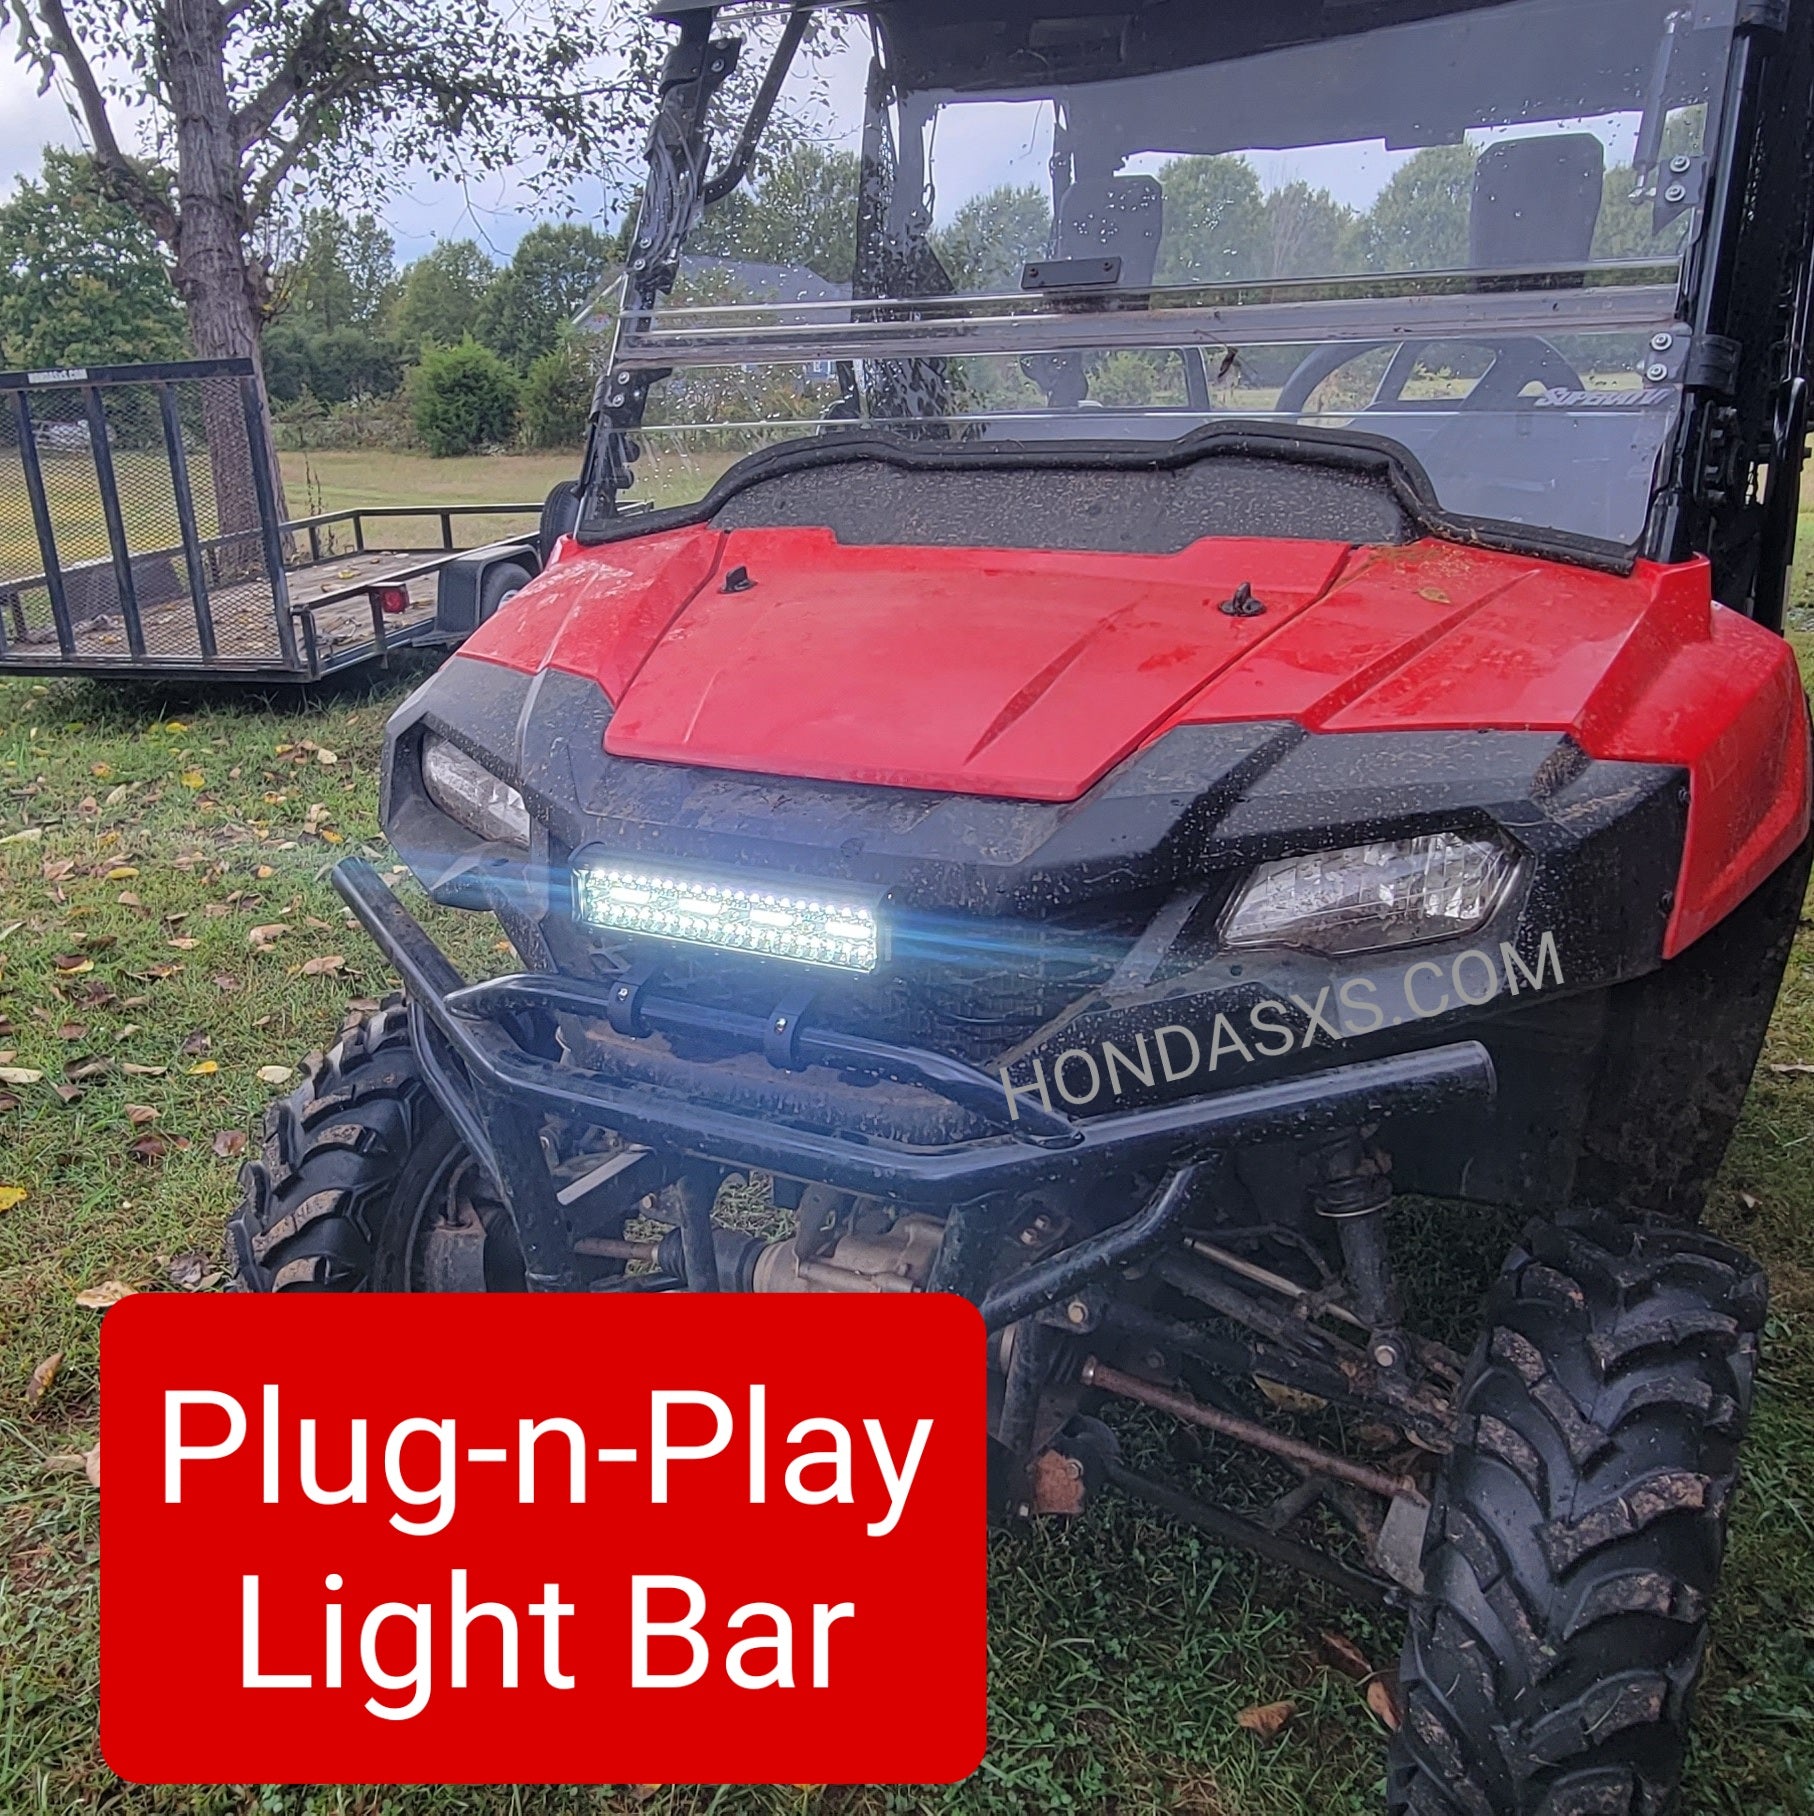 Pioneer 700 Plug-n-Play front 12" light bar for OEM bumper.